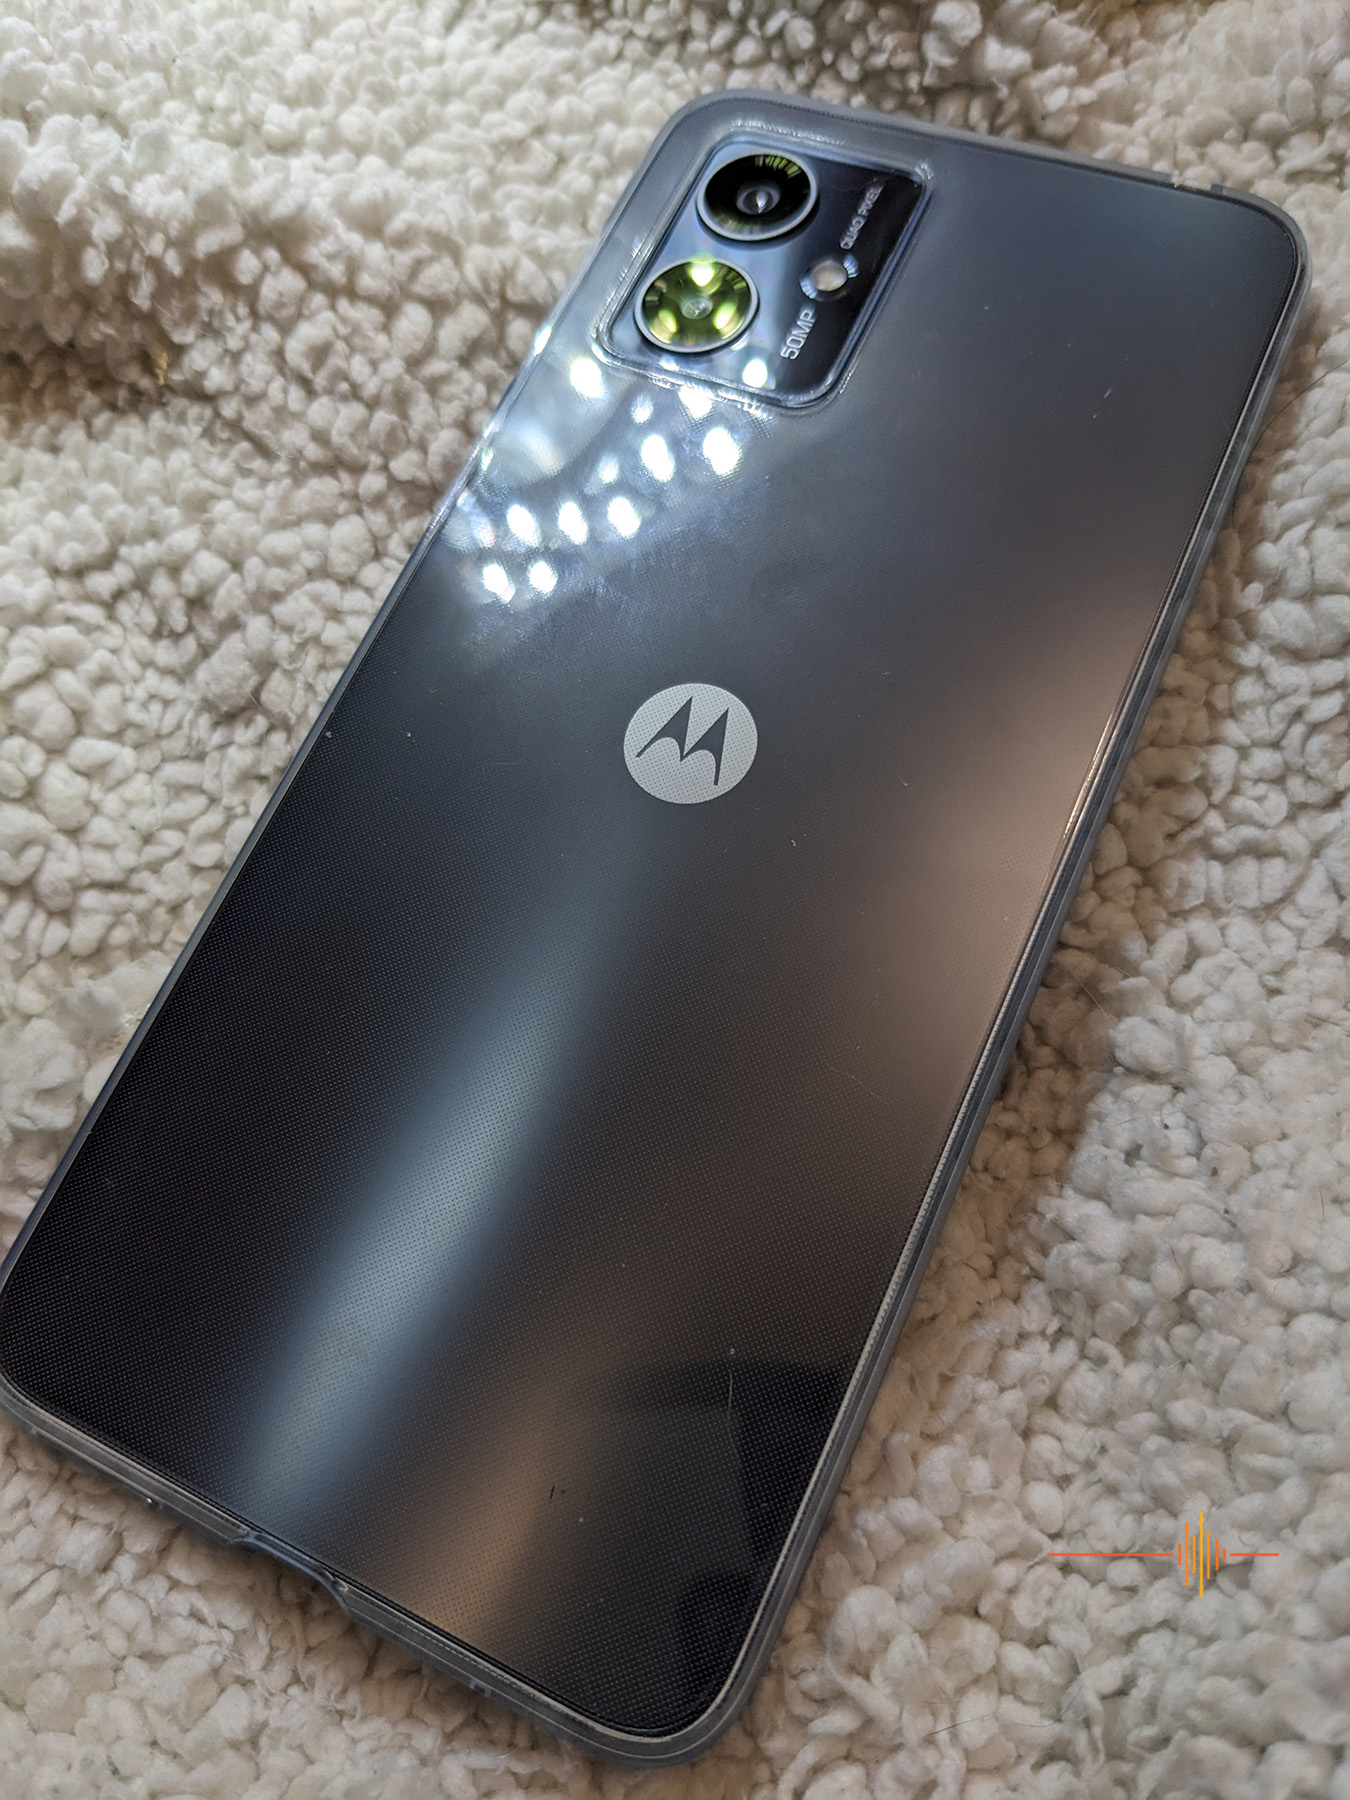 Motorola Moto G14 smartphone review - Storage giant in vegan leather -   Reviews